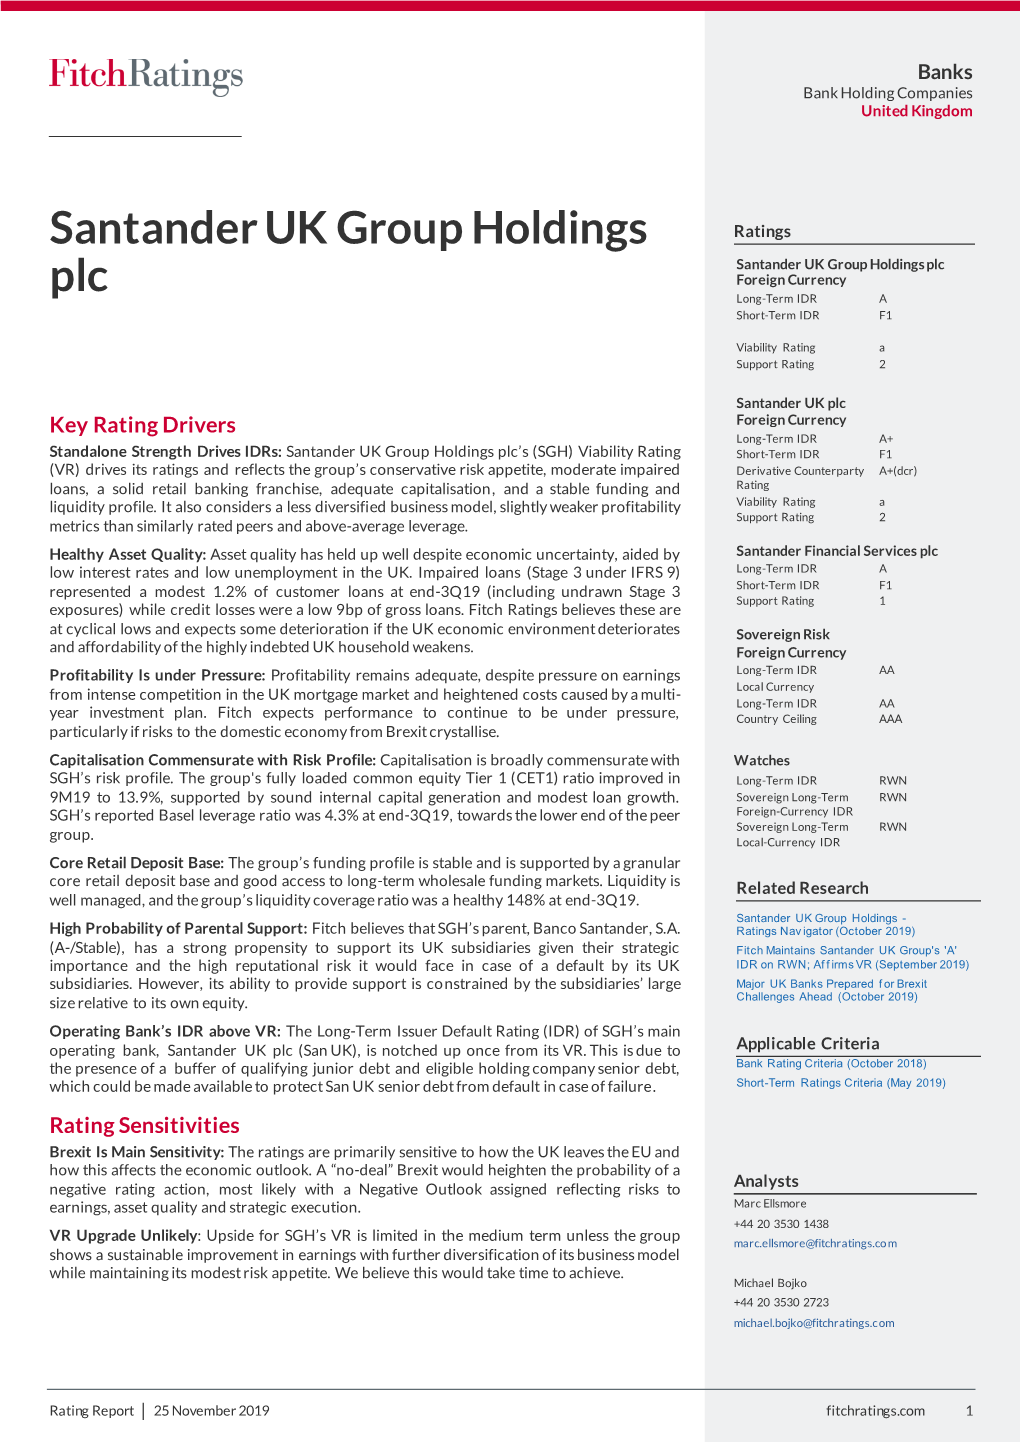 Santander UK Group Holdings Ratings Santander UK Group Holdings Plc Plc Foreign Currency Long-Term IDR a Short-Term IDR F1